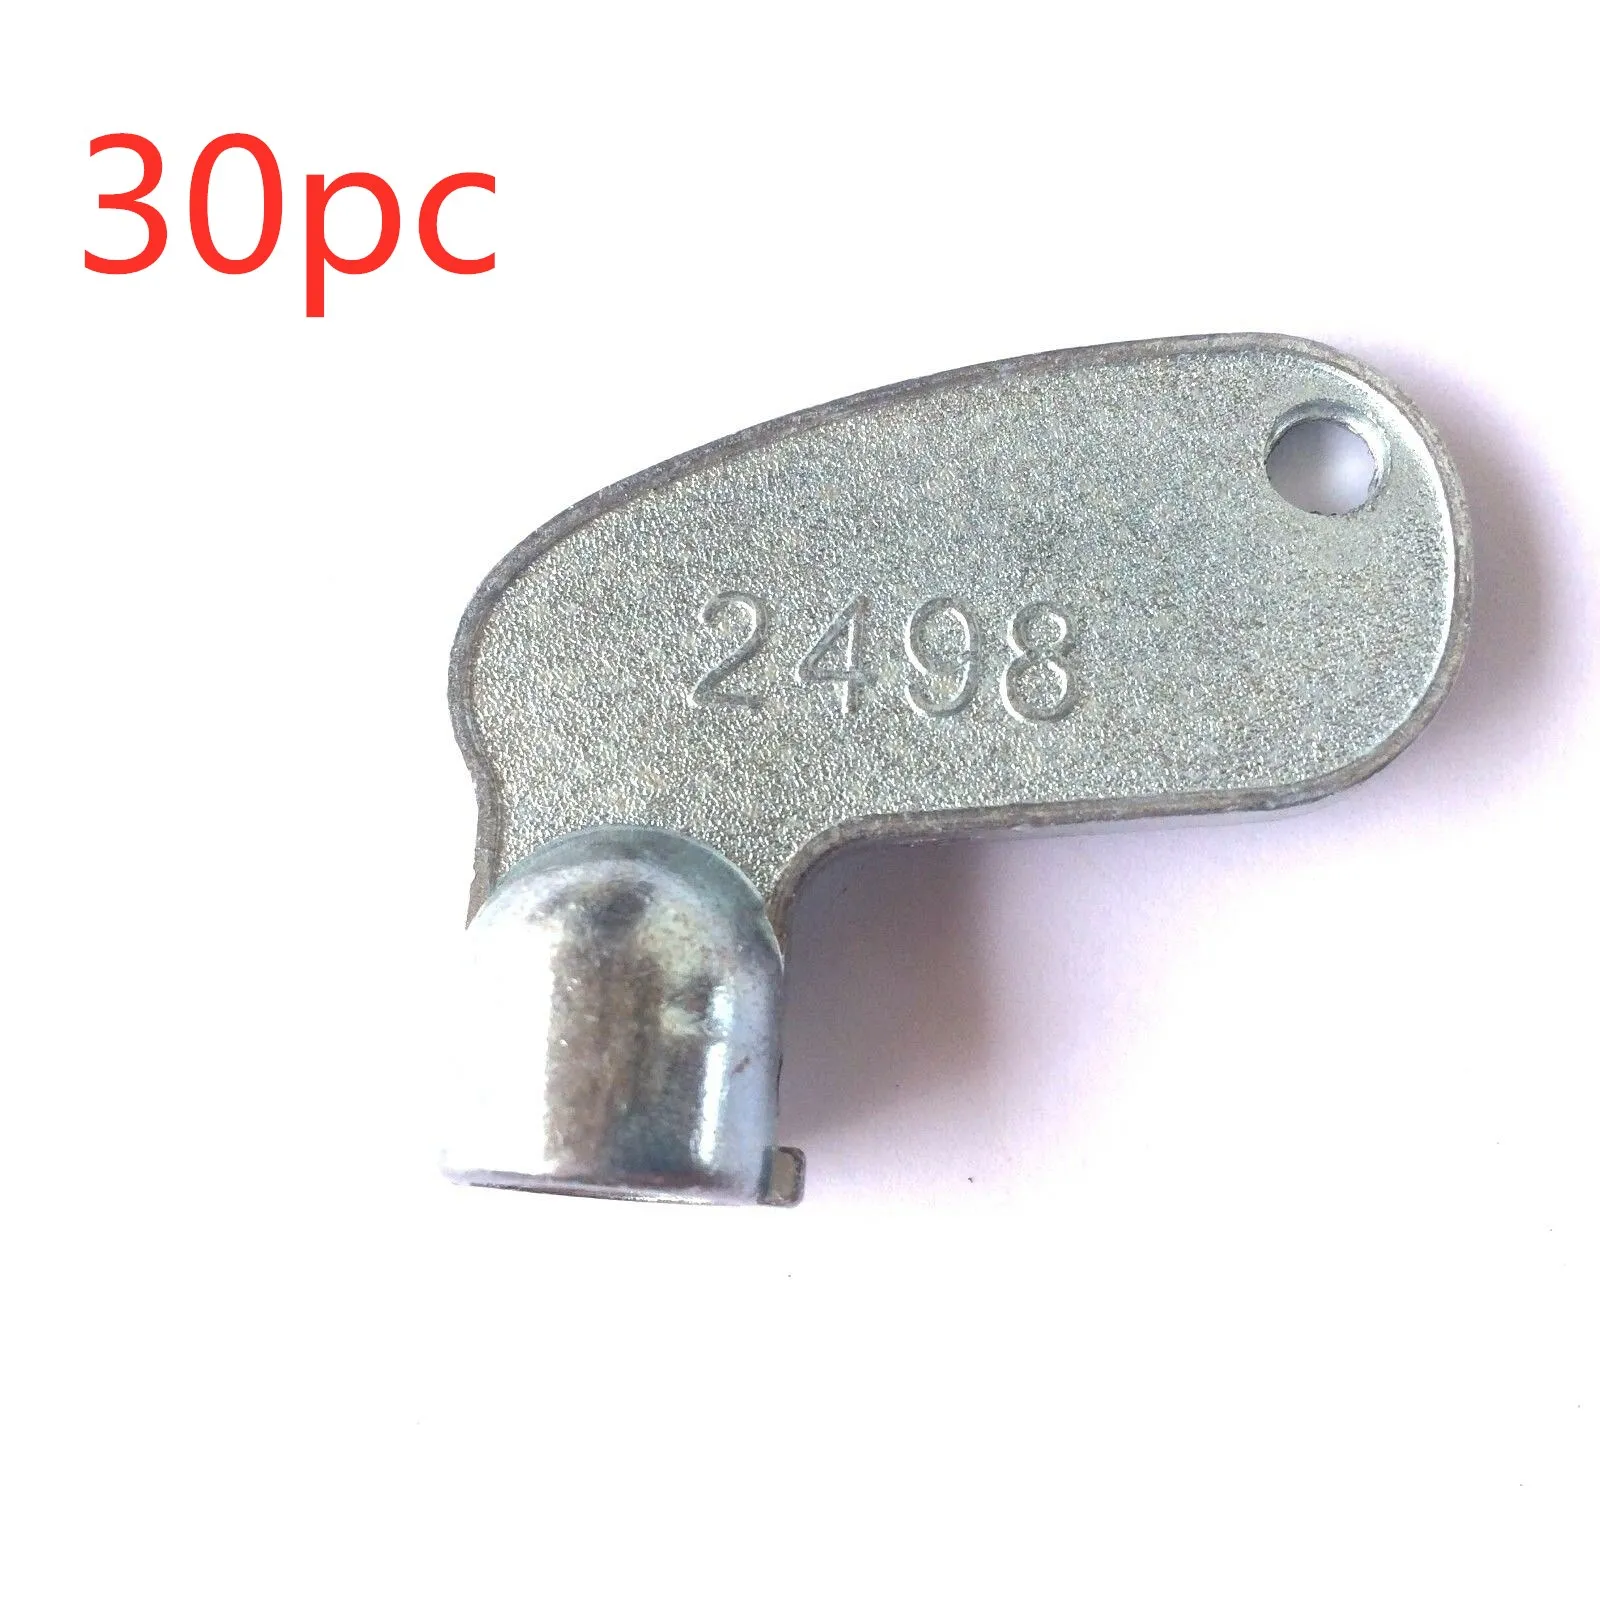 30pc 2498 Equipment Key for Magnum Isuzu For TCM Bomag  For Kobelco Pel-Job Marooka